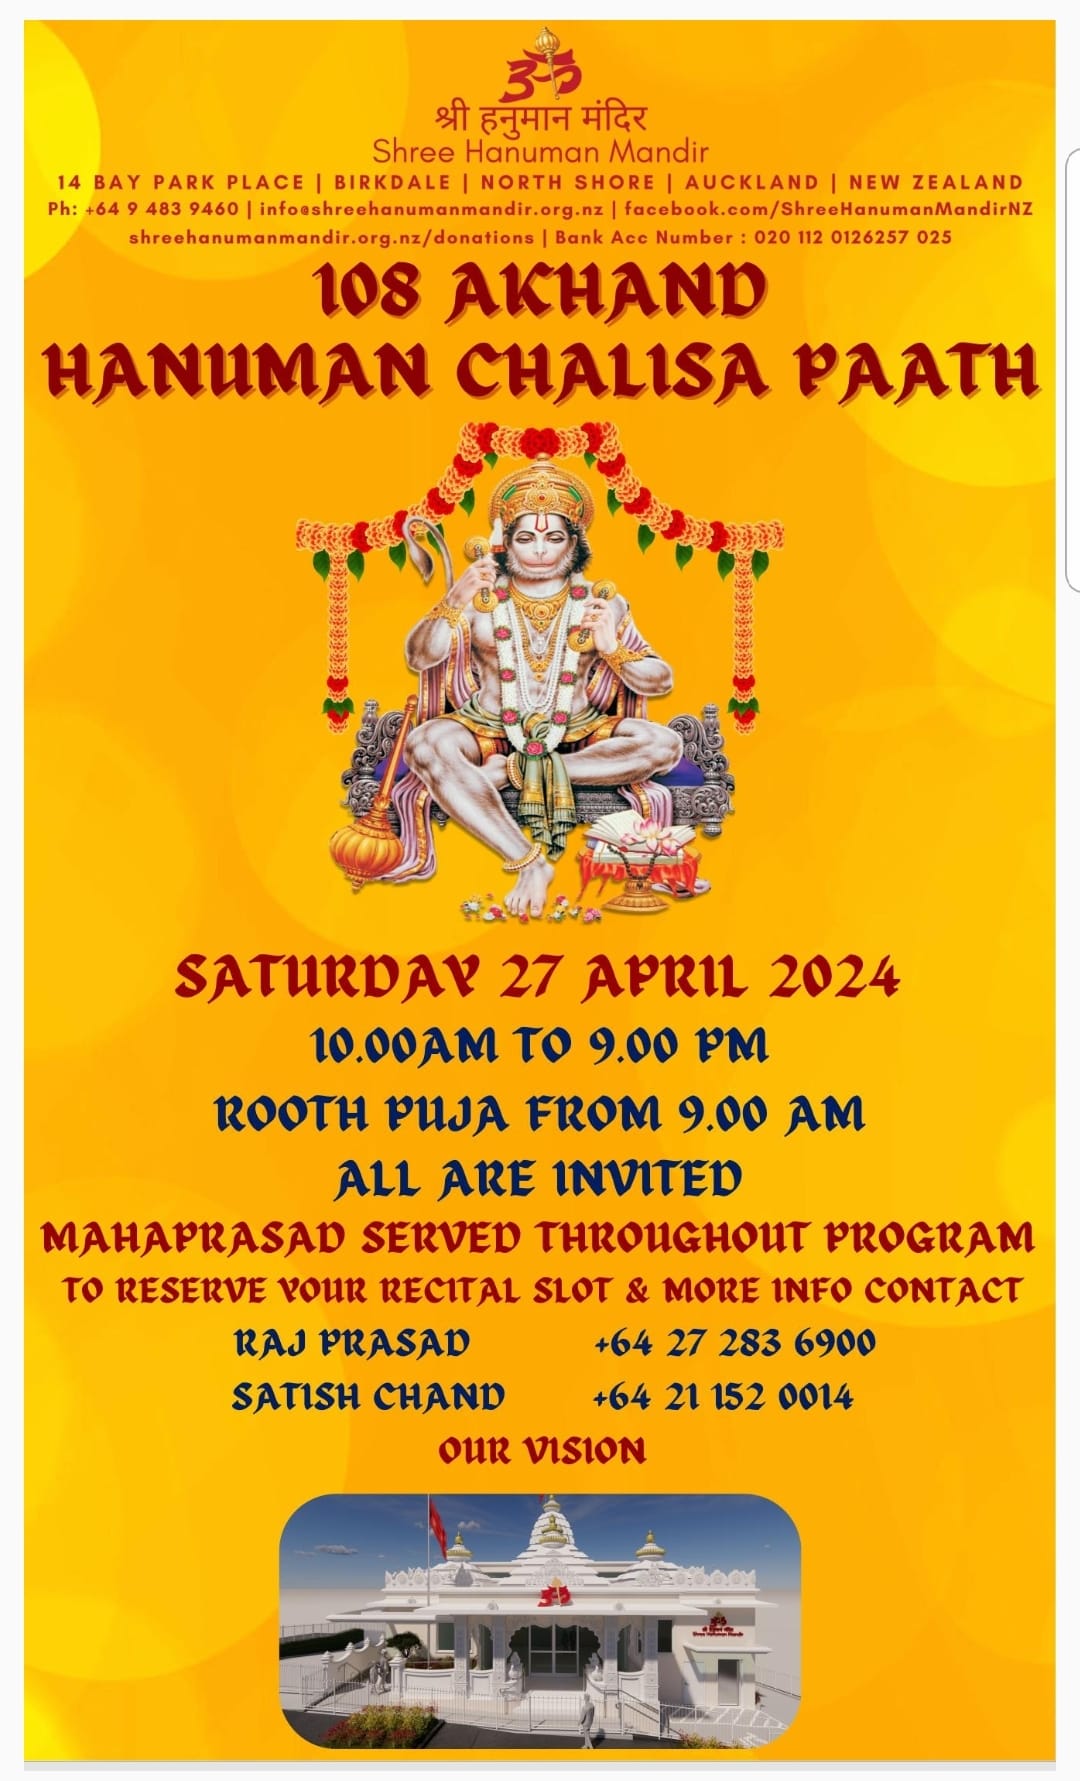 Hanuman Jayanti Celebrations at Shree Hanuman Mandir Invite All Devotees